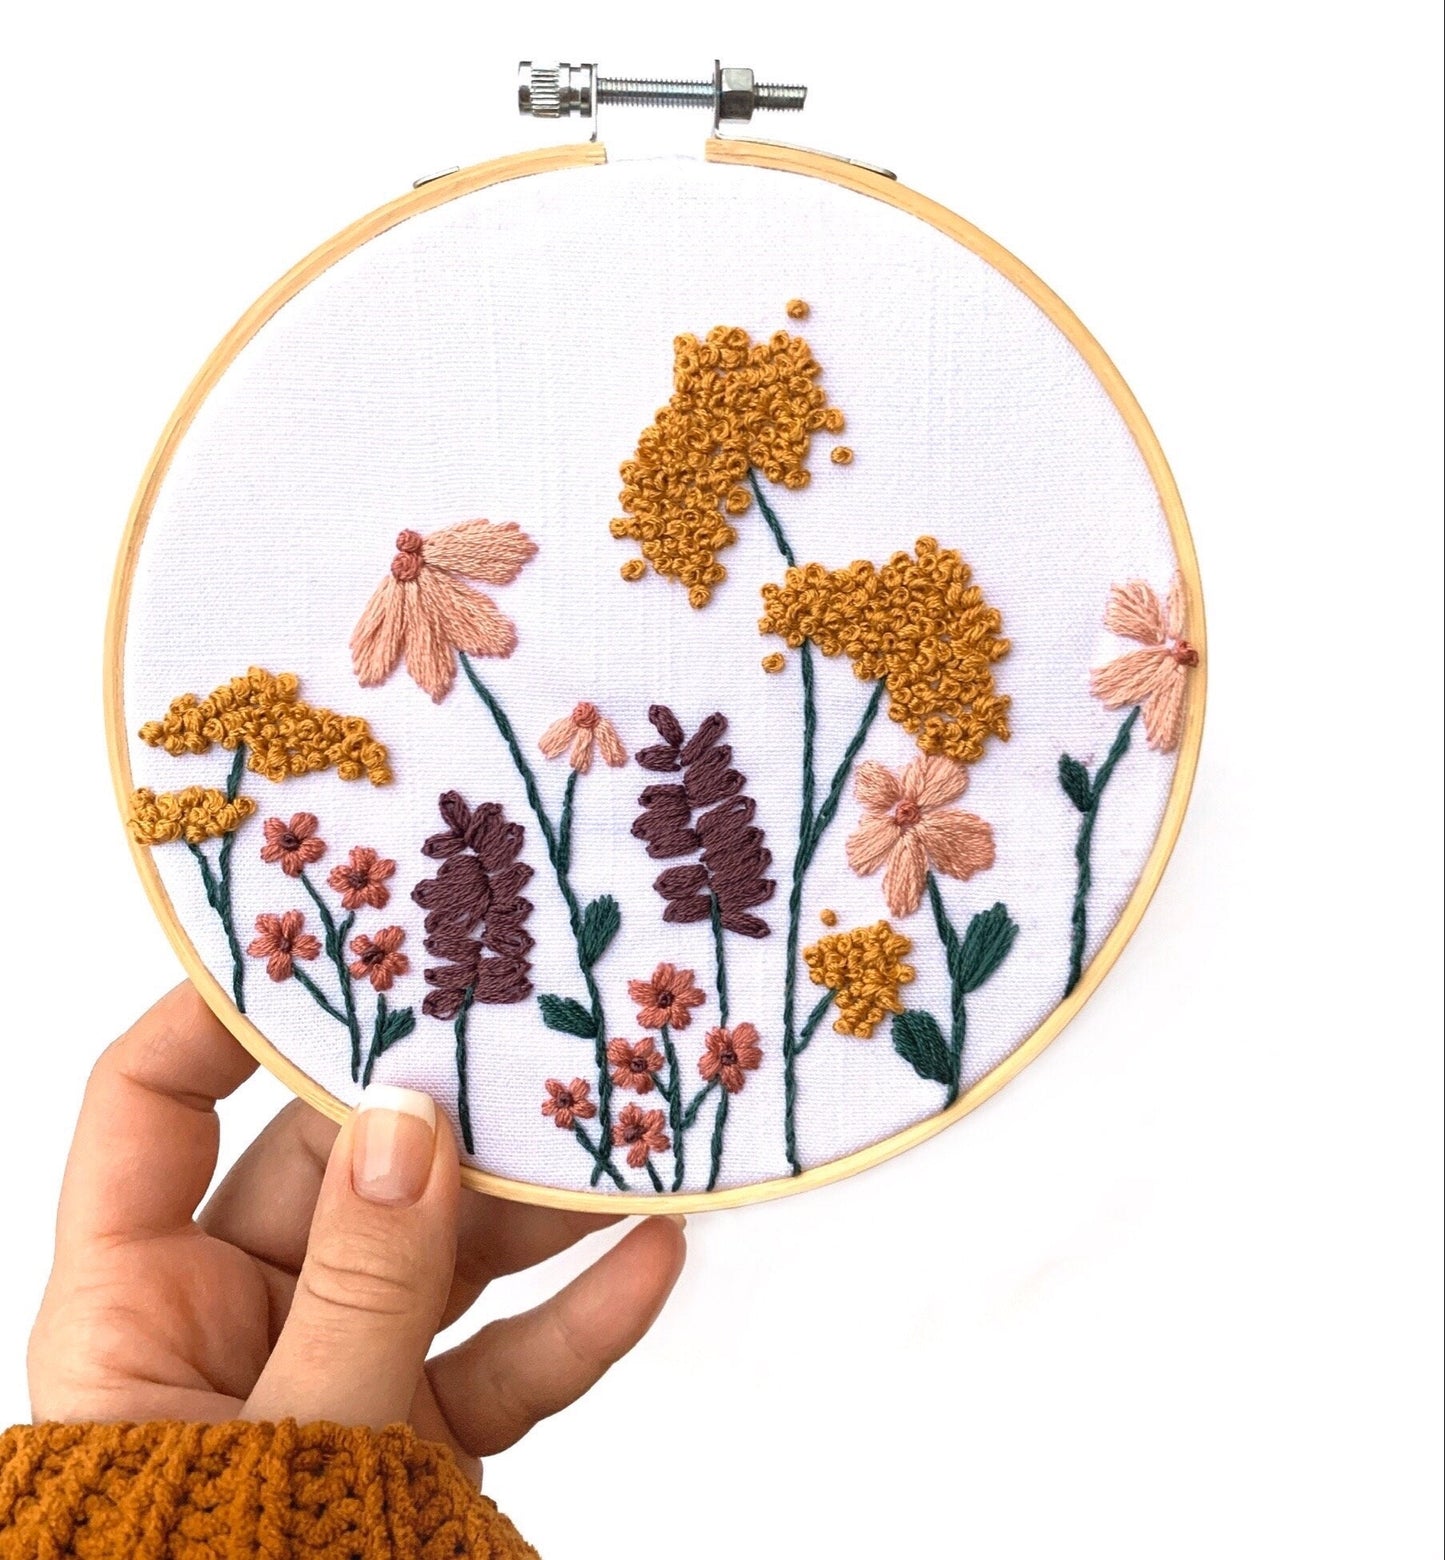 Grandma's Garden PDF Embroidery Pattern